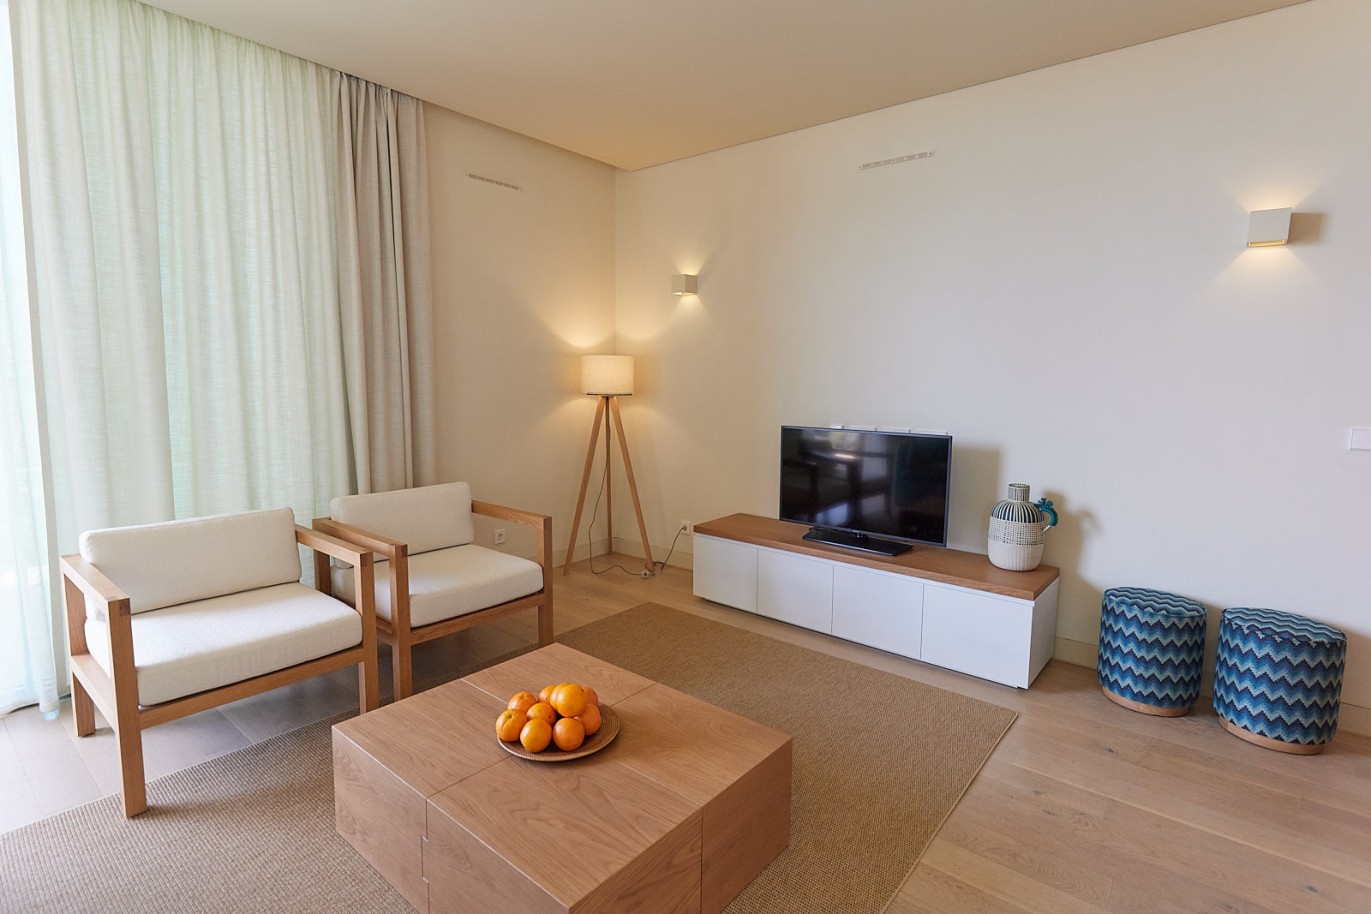 2 bedroom apartment in resort, for sale in Porches, Algarve_229213